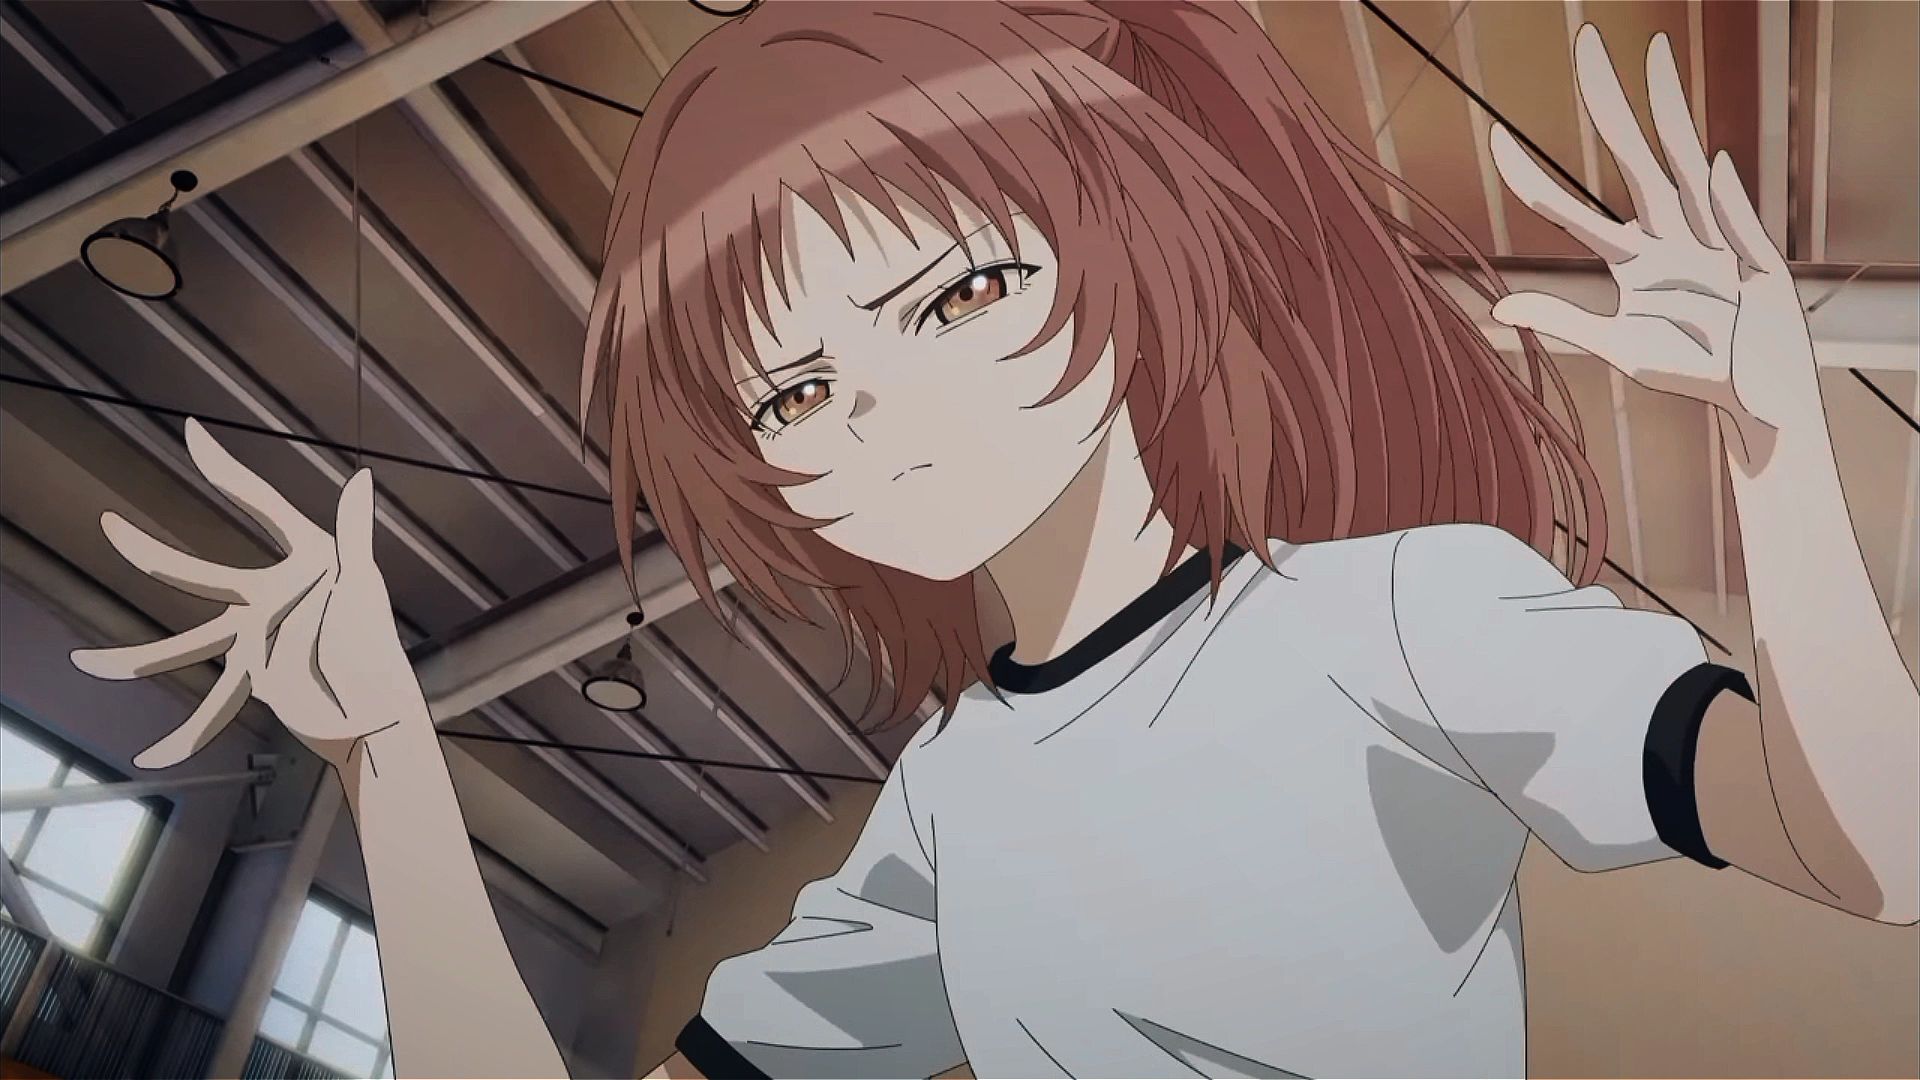 Suki na Ko ga Megane wo Wasureta – 05 - Lost in Anime